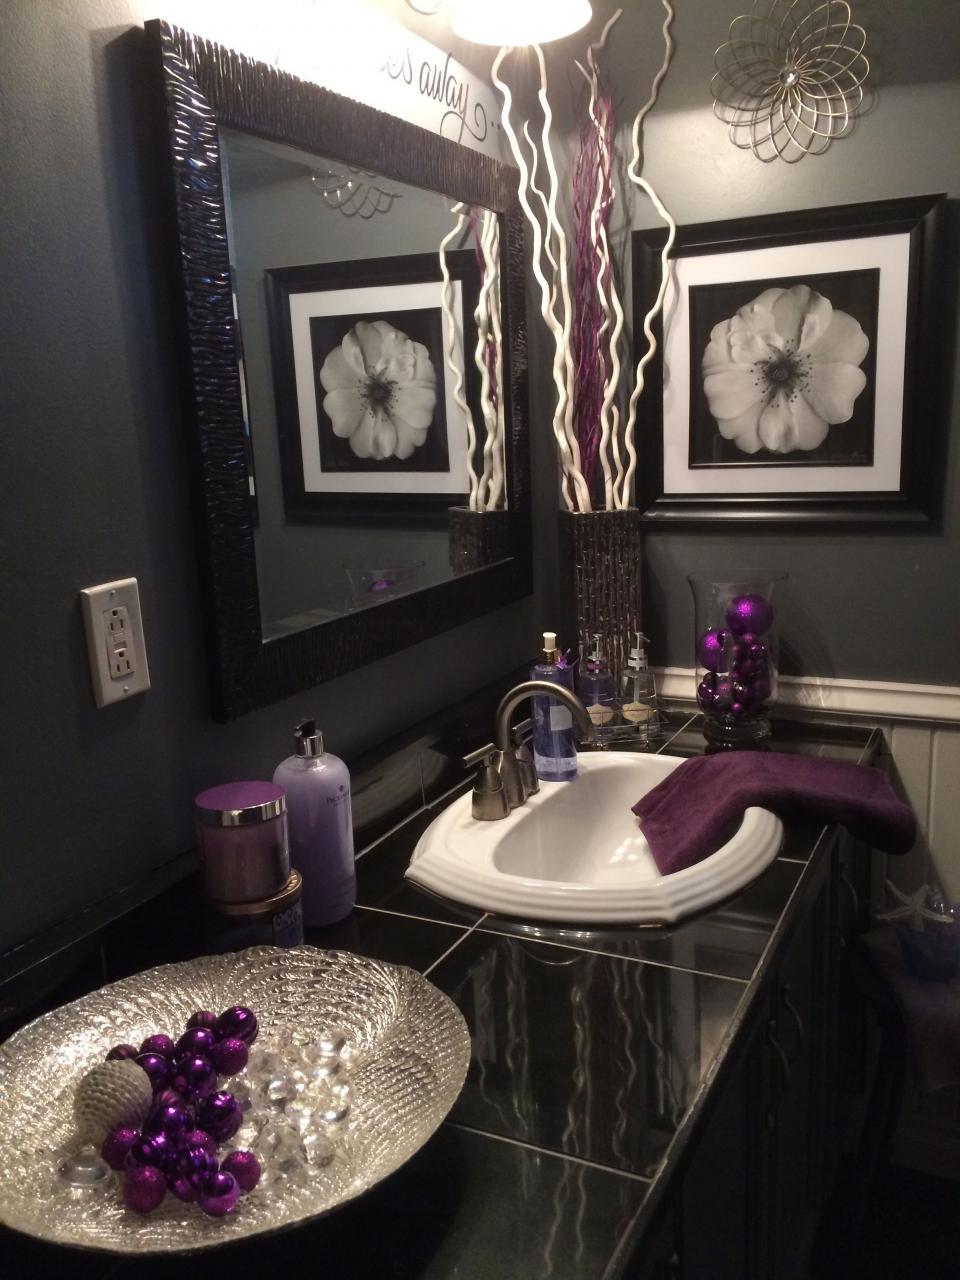 Black and grey bathroom with lavender accents bathroomdesignguidelines